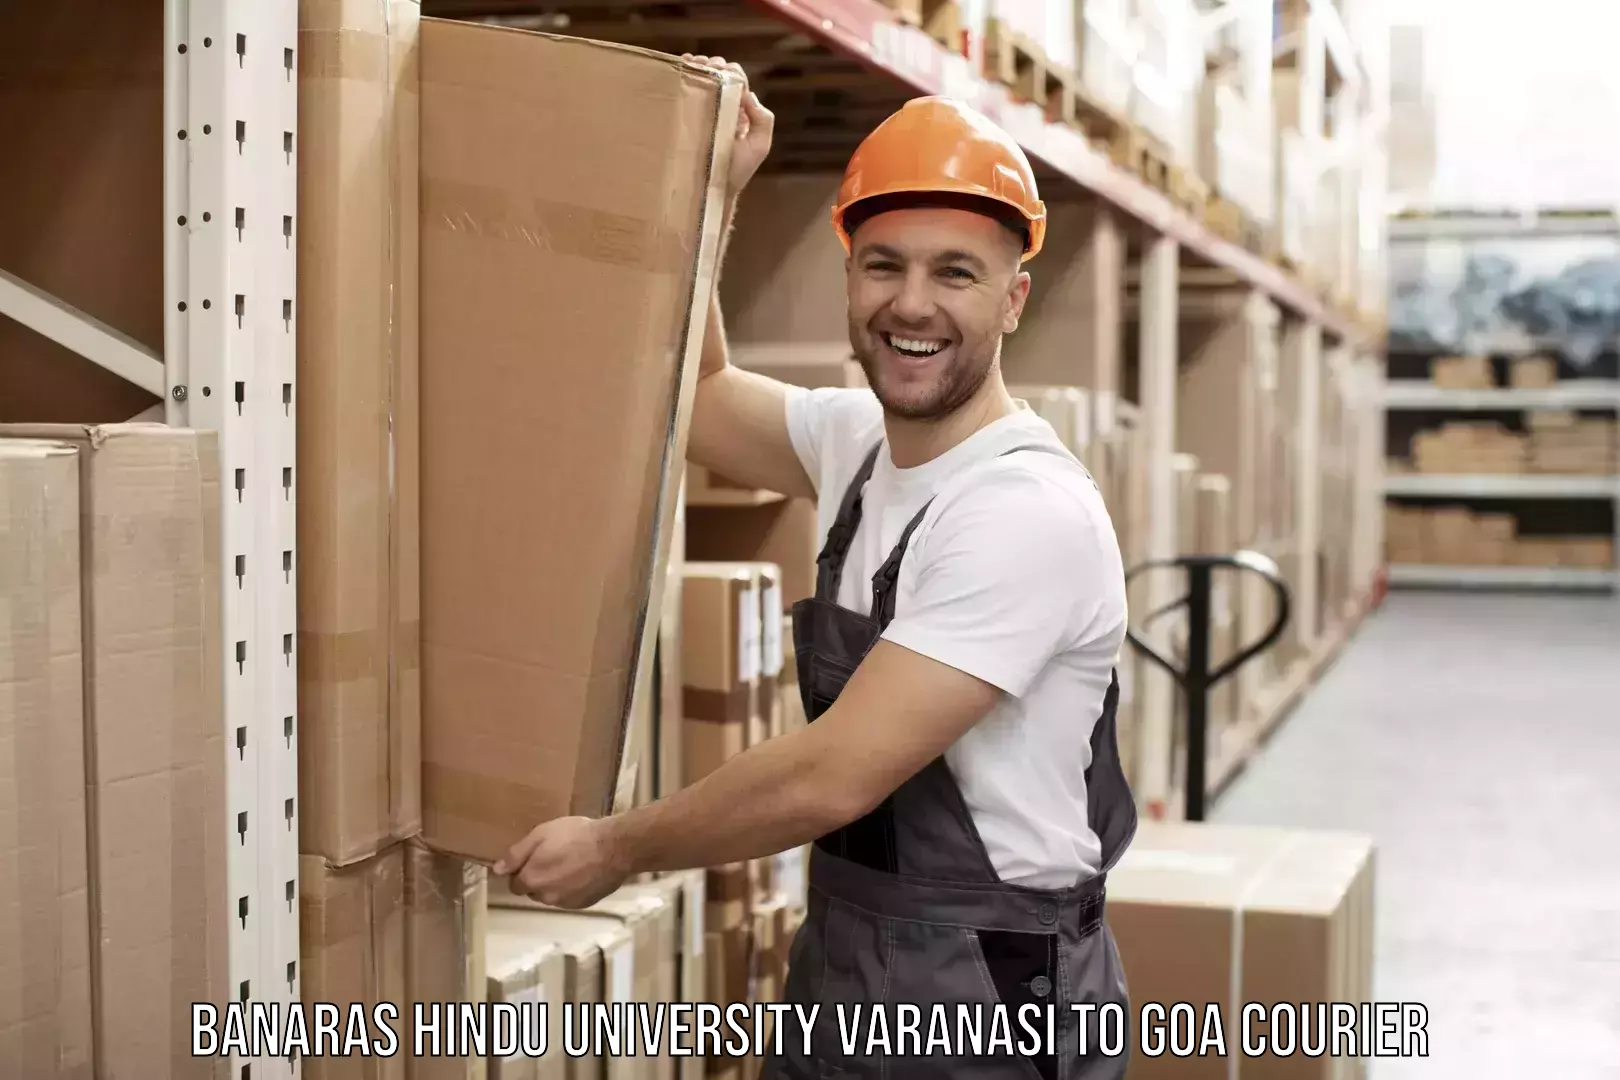 Efficient moving company Banaras Hindu University Varanasi to Vasco da Gama